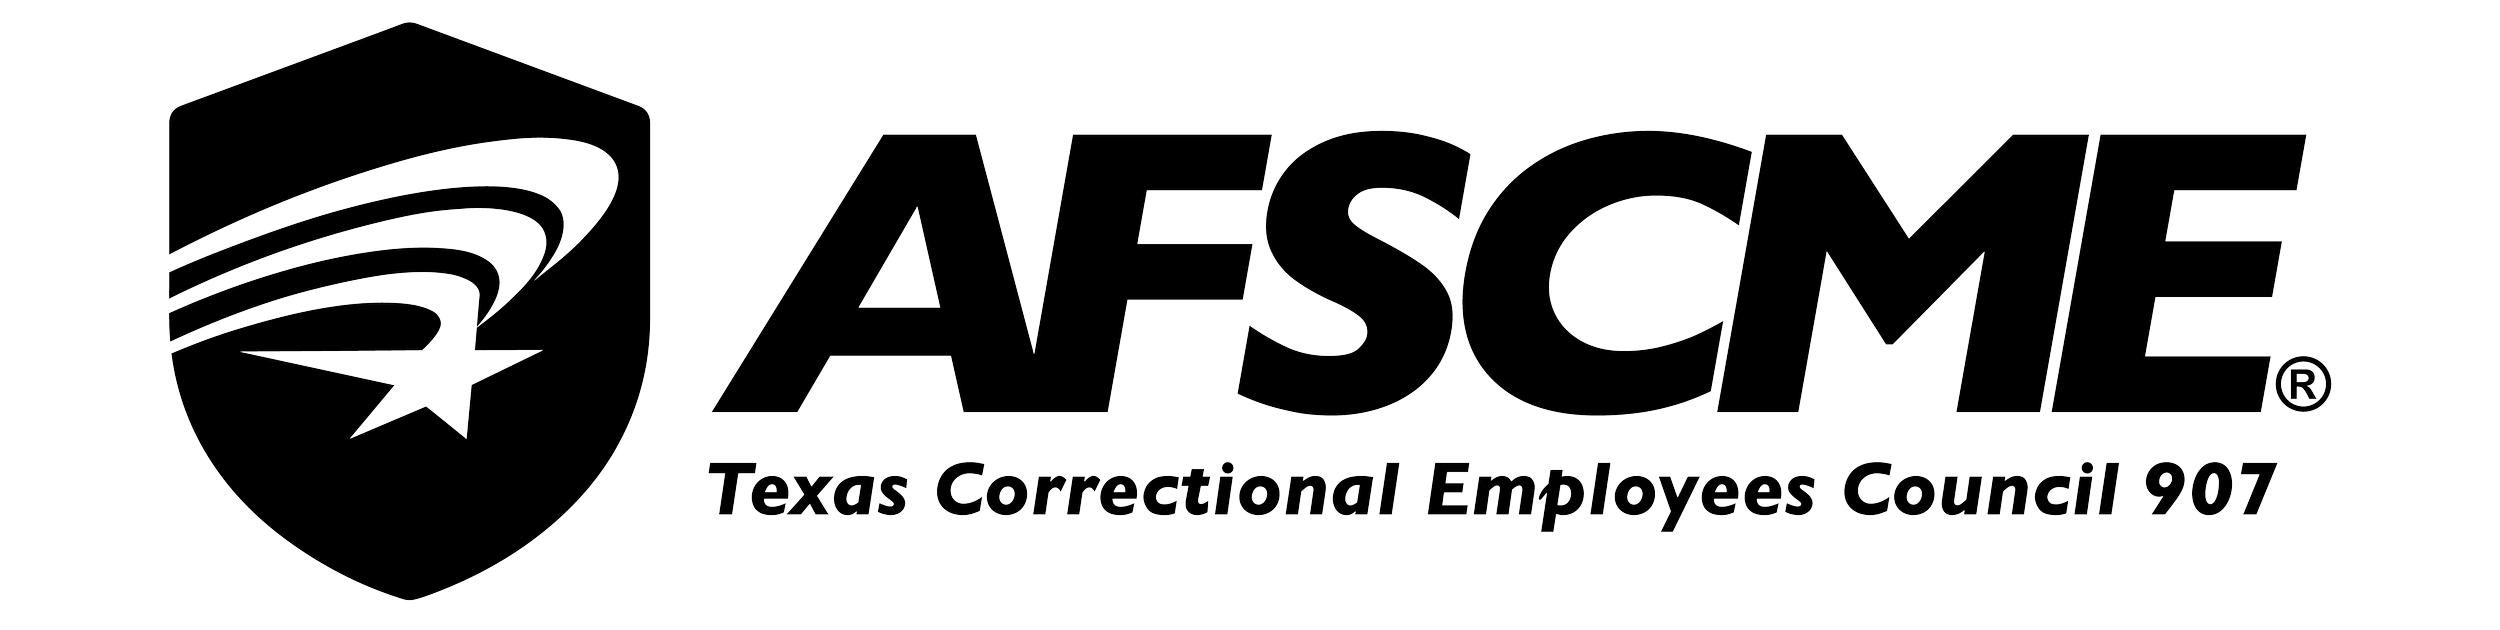 AFSCME-TCEC-Horizontal Logo - black (002).png